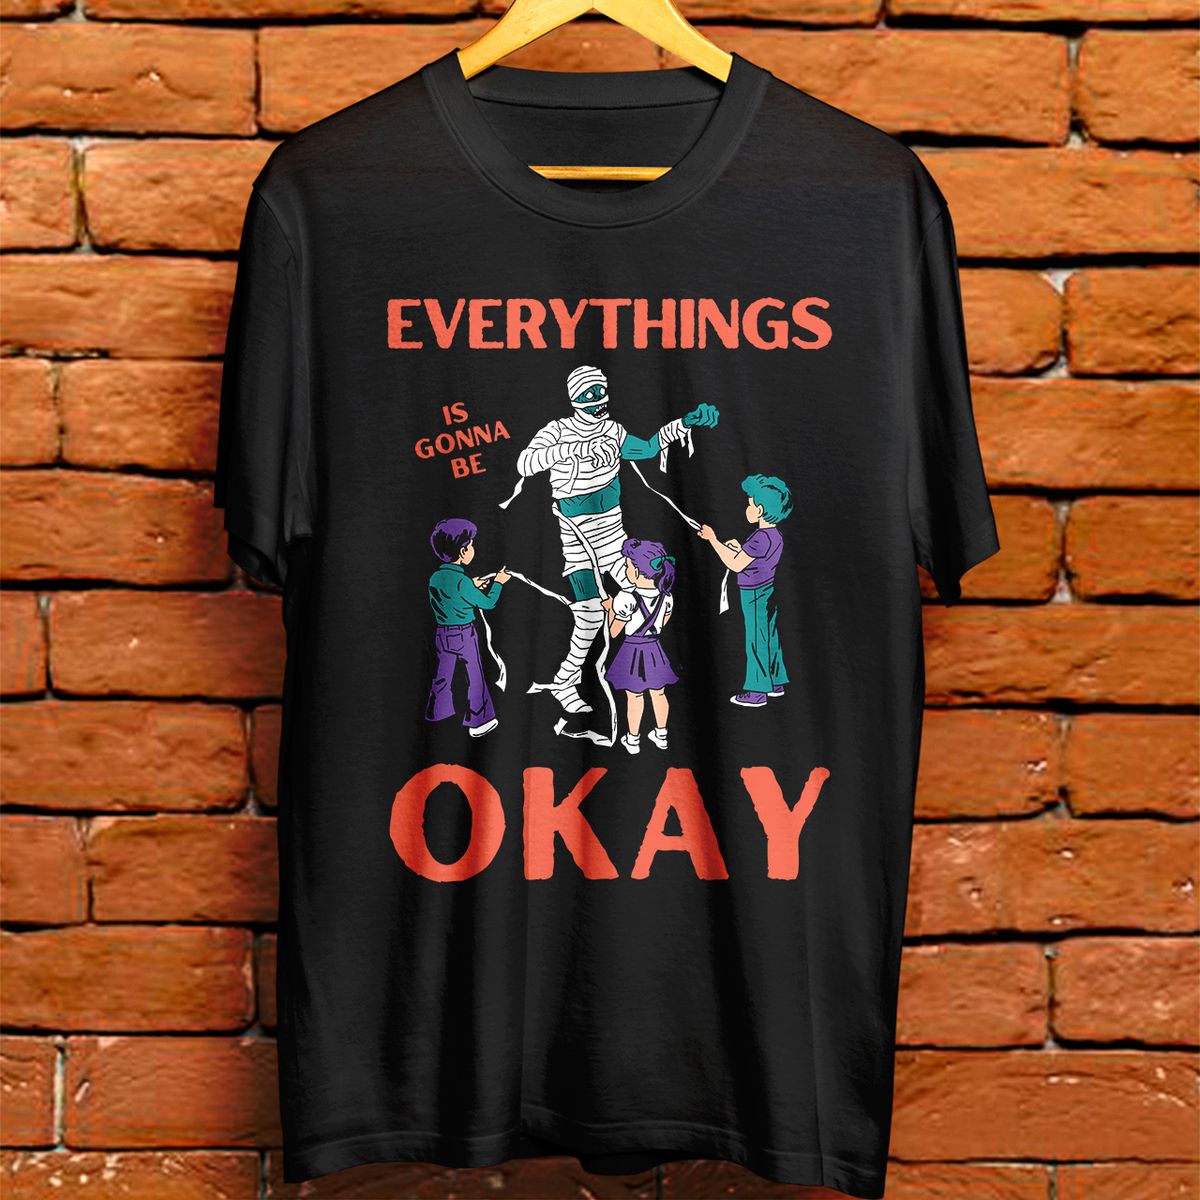 Nome do produto: Camiseta masculina - Everythings is gonna be okay